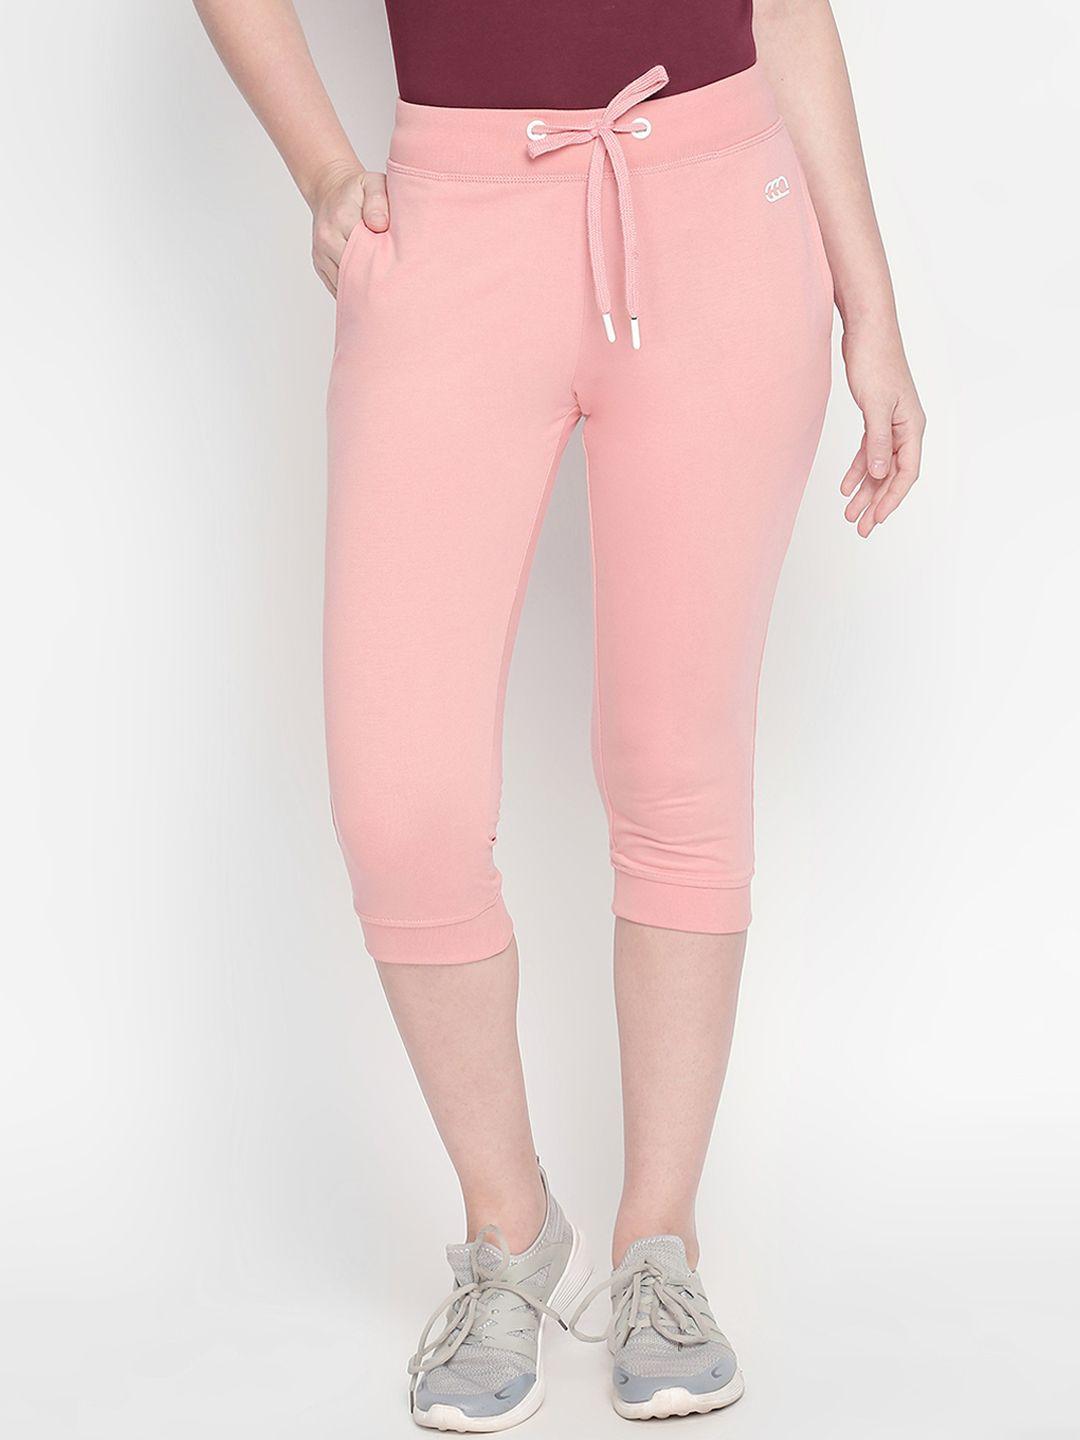 ajile by pantaloons women pink solid regular fit capris